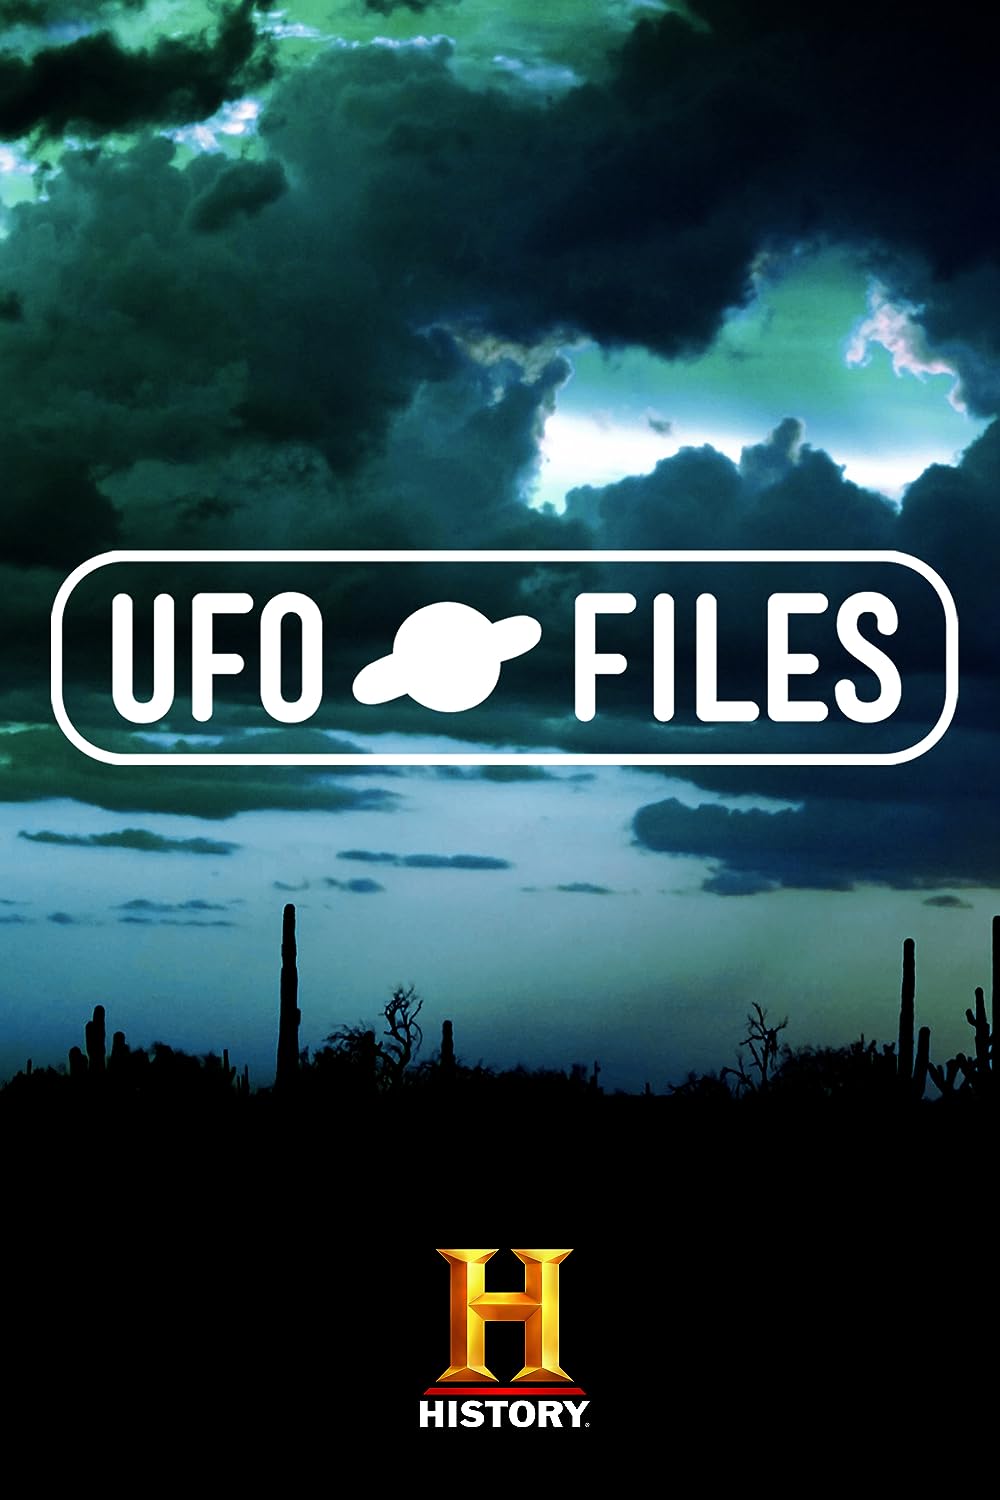 the ufo files - 2004 - 2007 very good series.